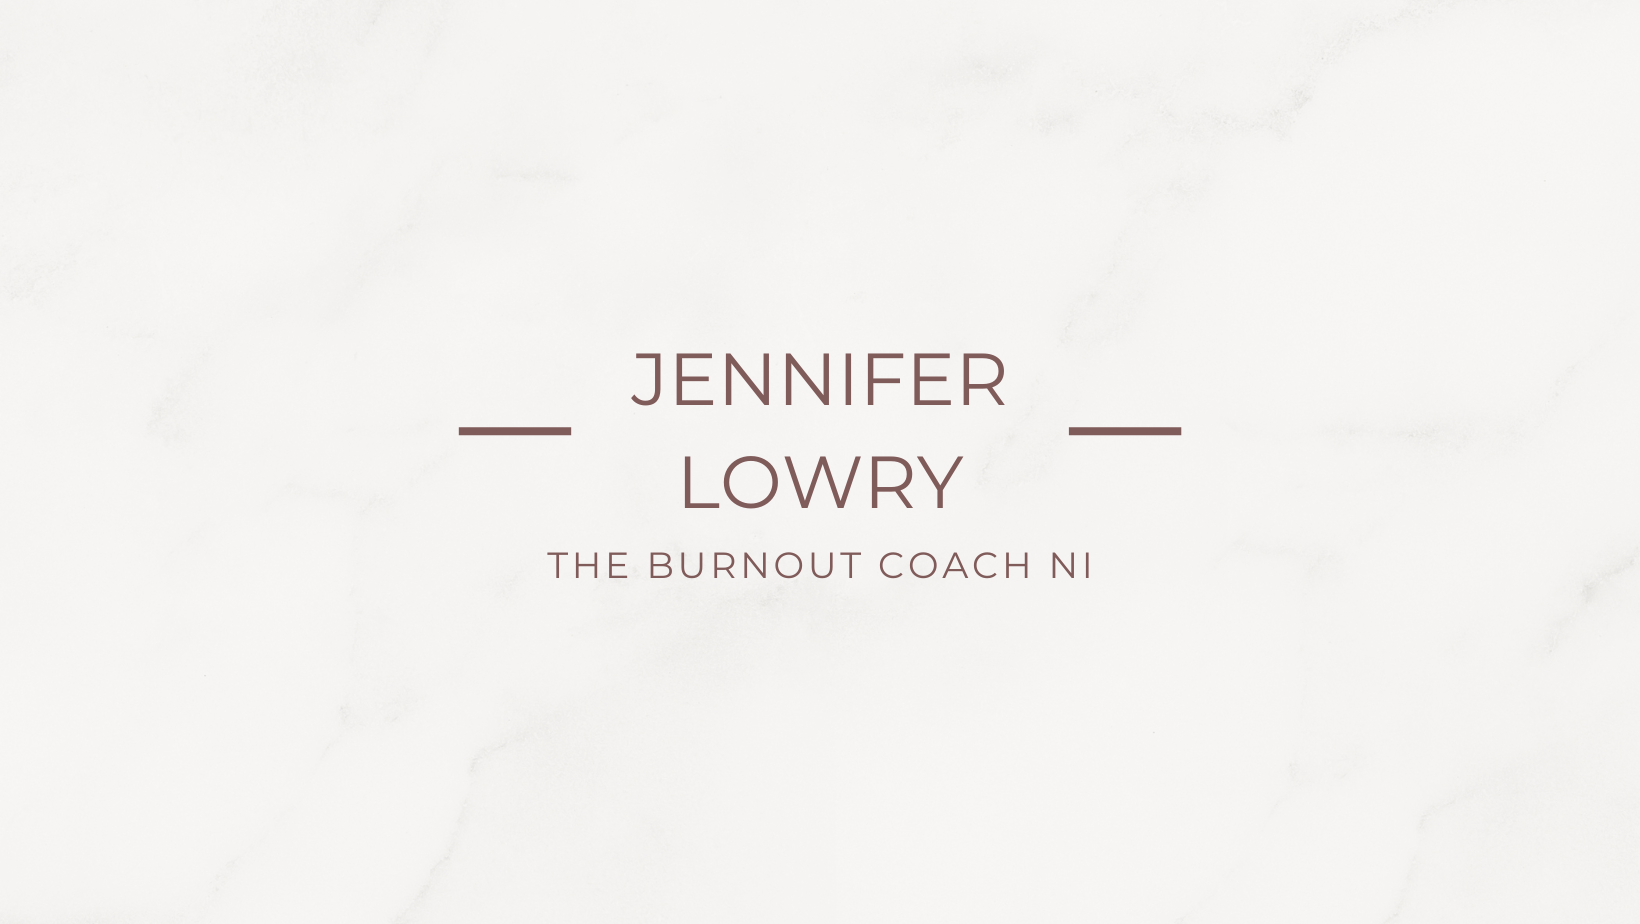 The Burnout Coach NI